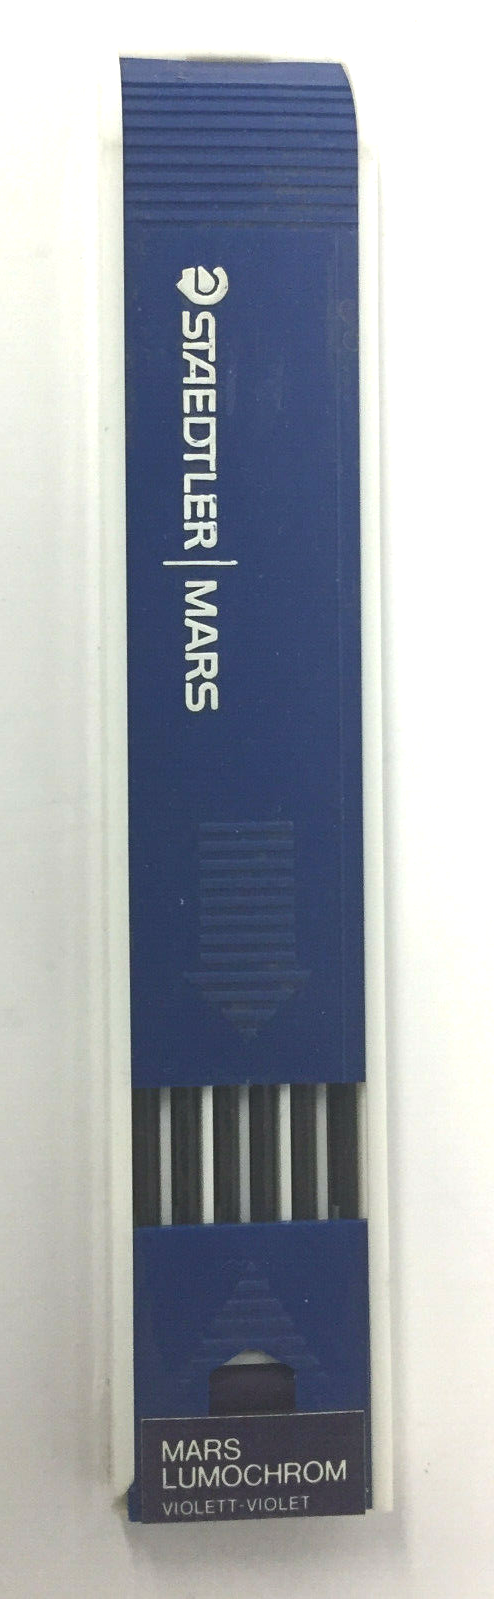 Staedtler Mars 2mm Voilet Lead Vintage Lumochrom 204-6 Brand New